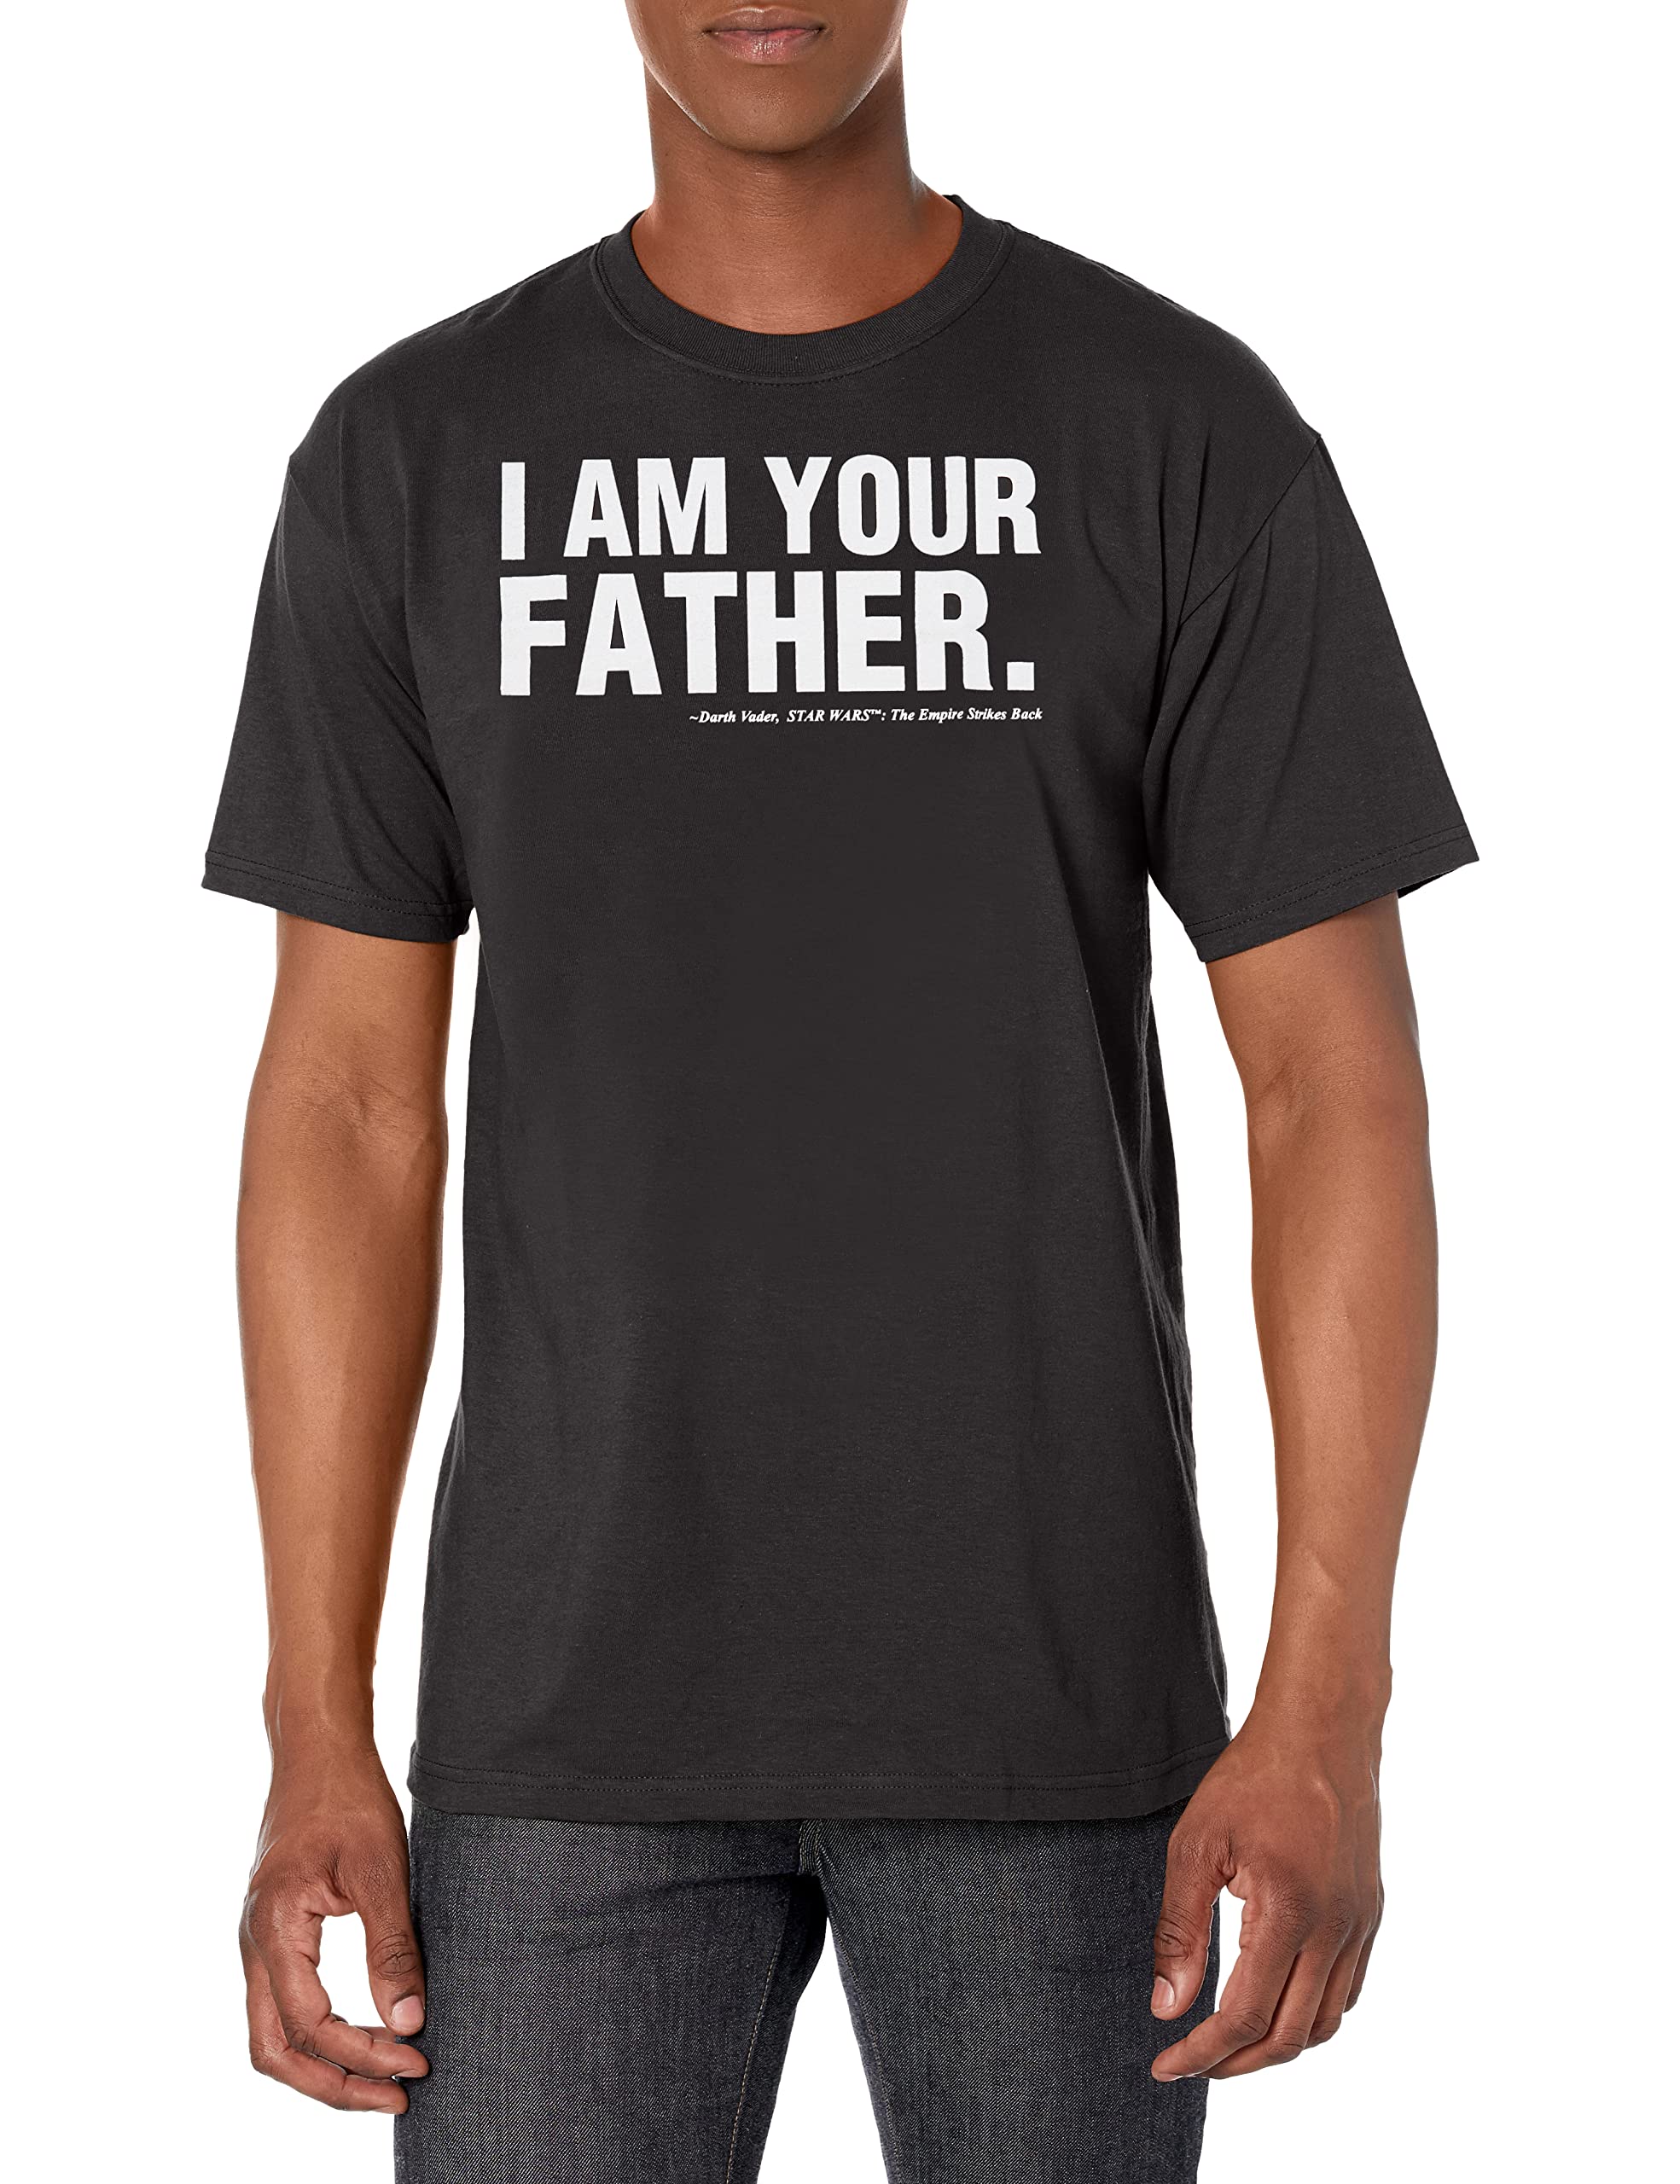 Star Wars Men's Darth Vader Space Father T-Shirt Black, X-Large